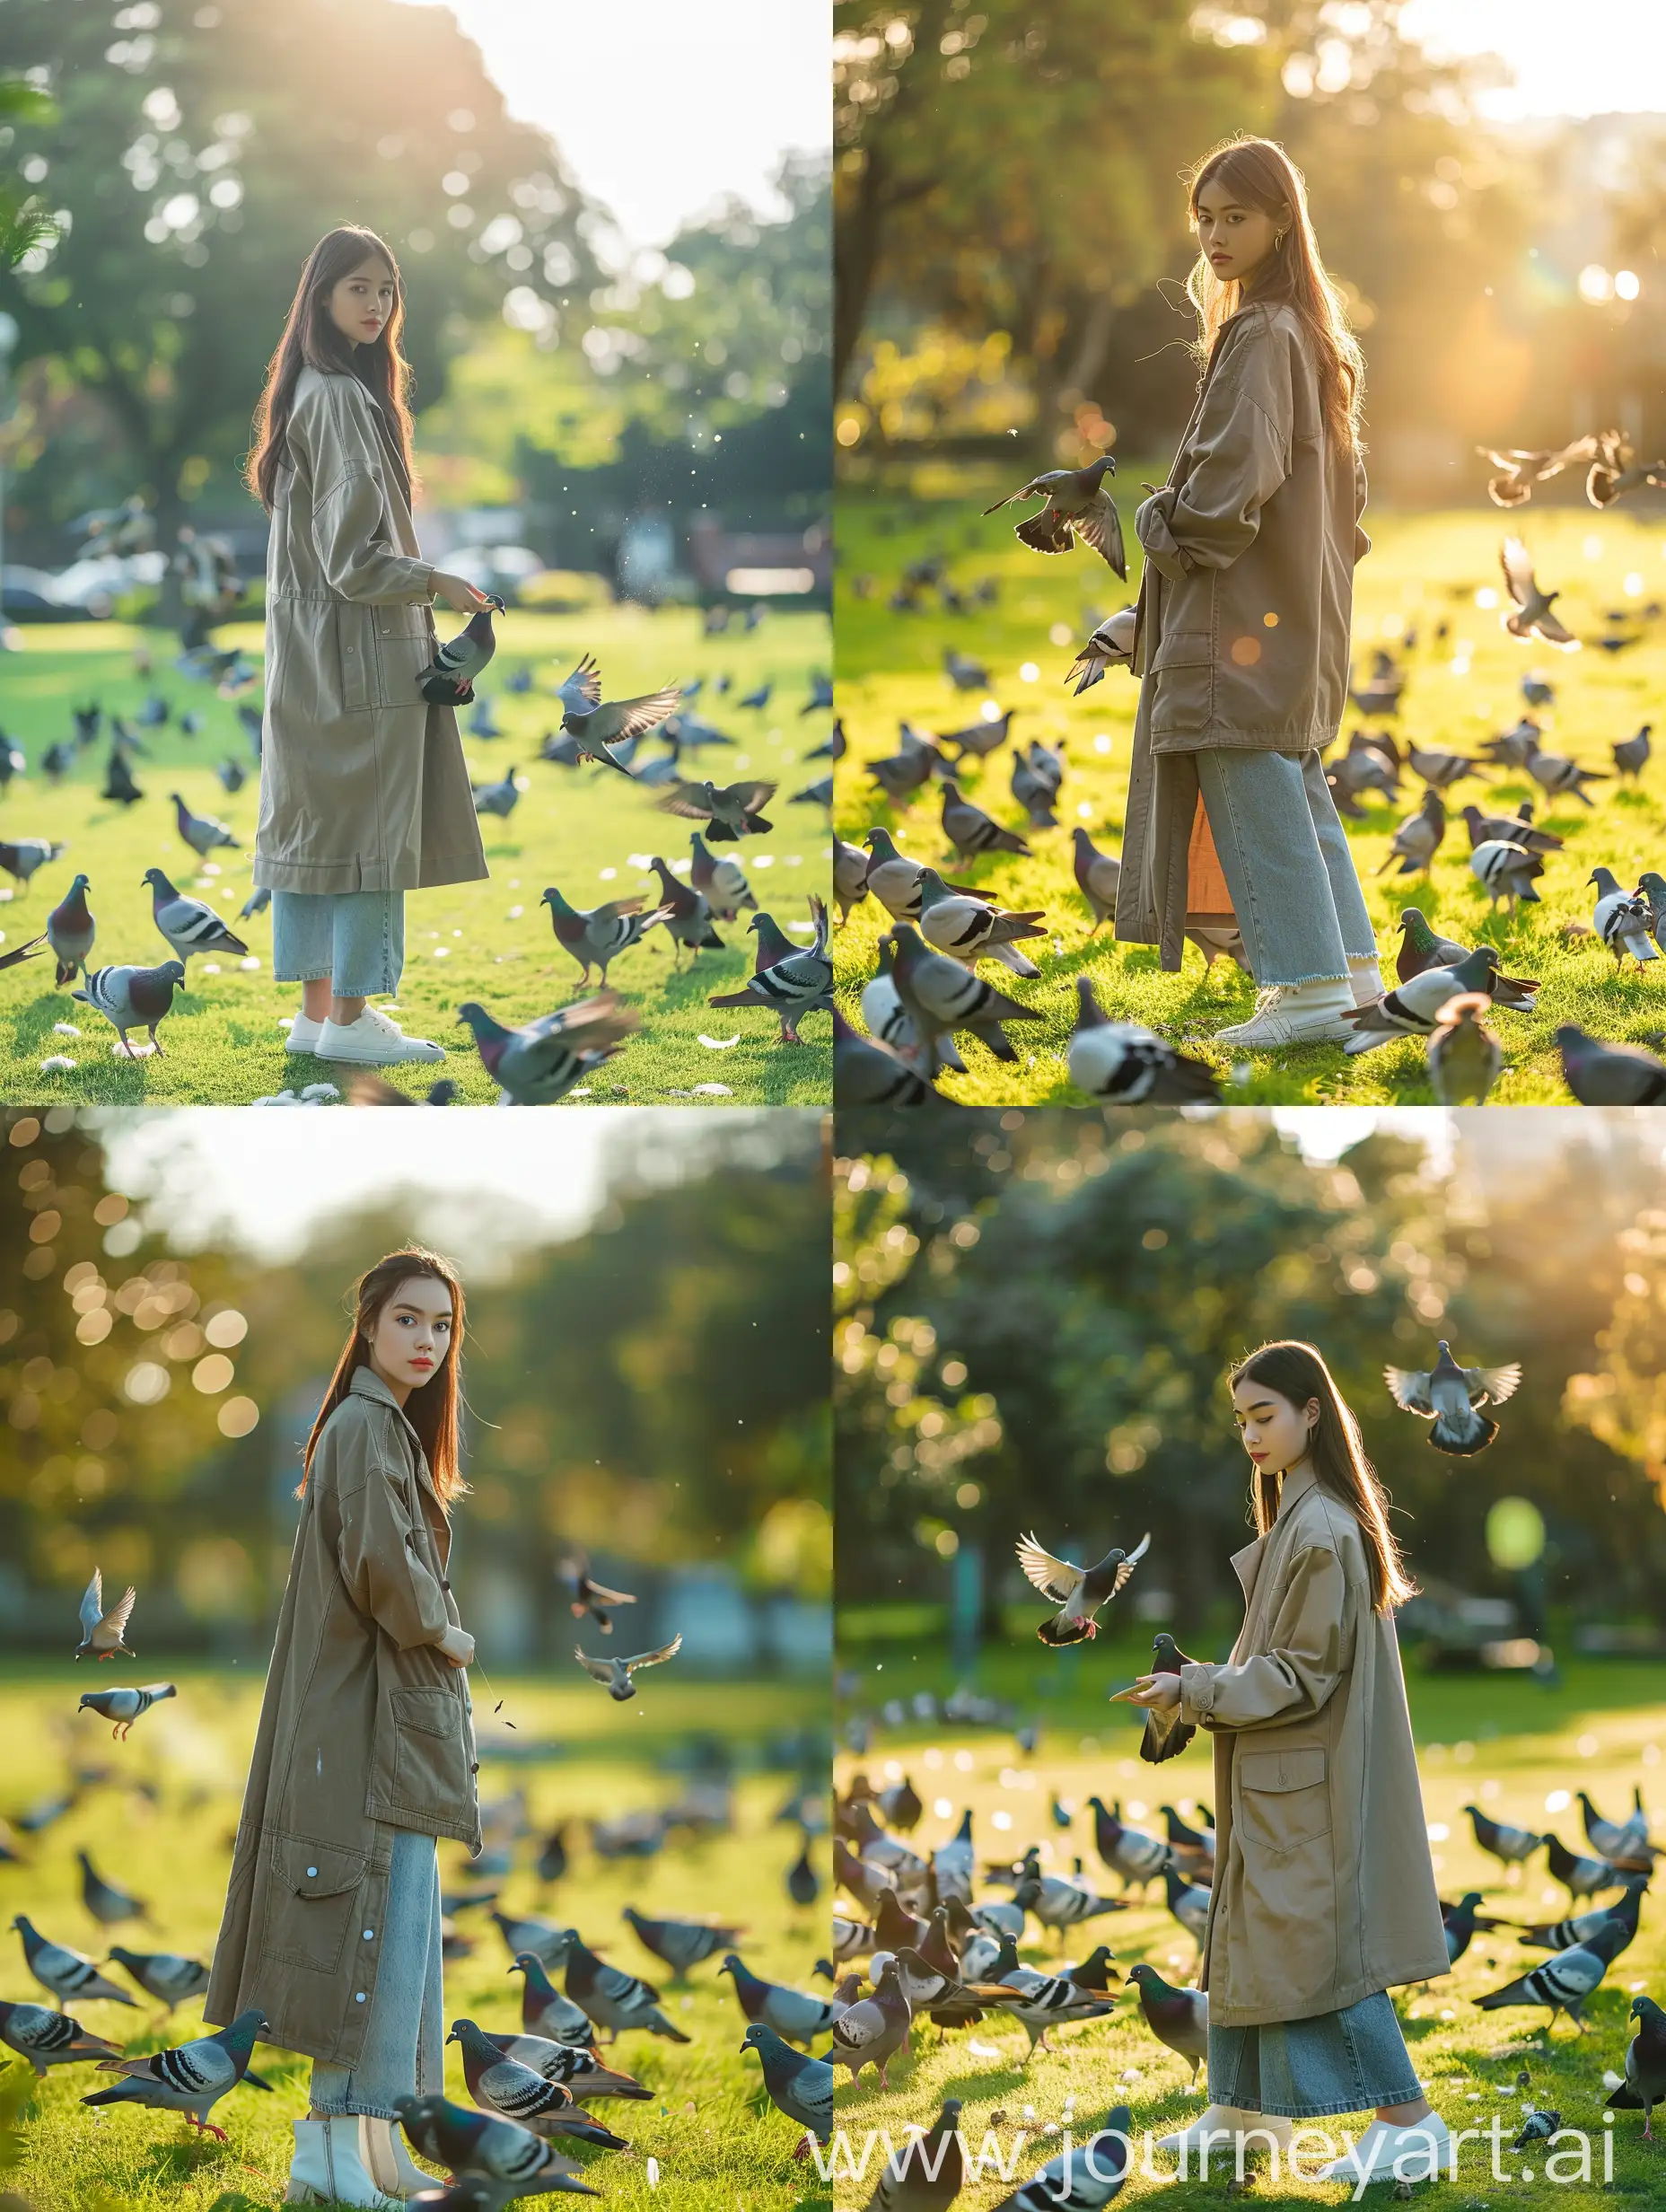 Thai-Woman-Feeding-Pigeons-in-Grassy-Field-under-Bright-Sunlight